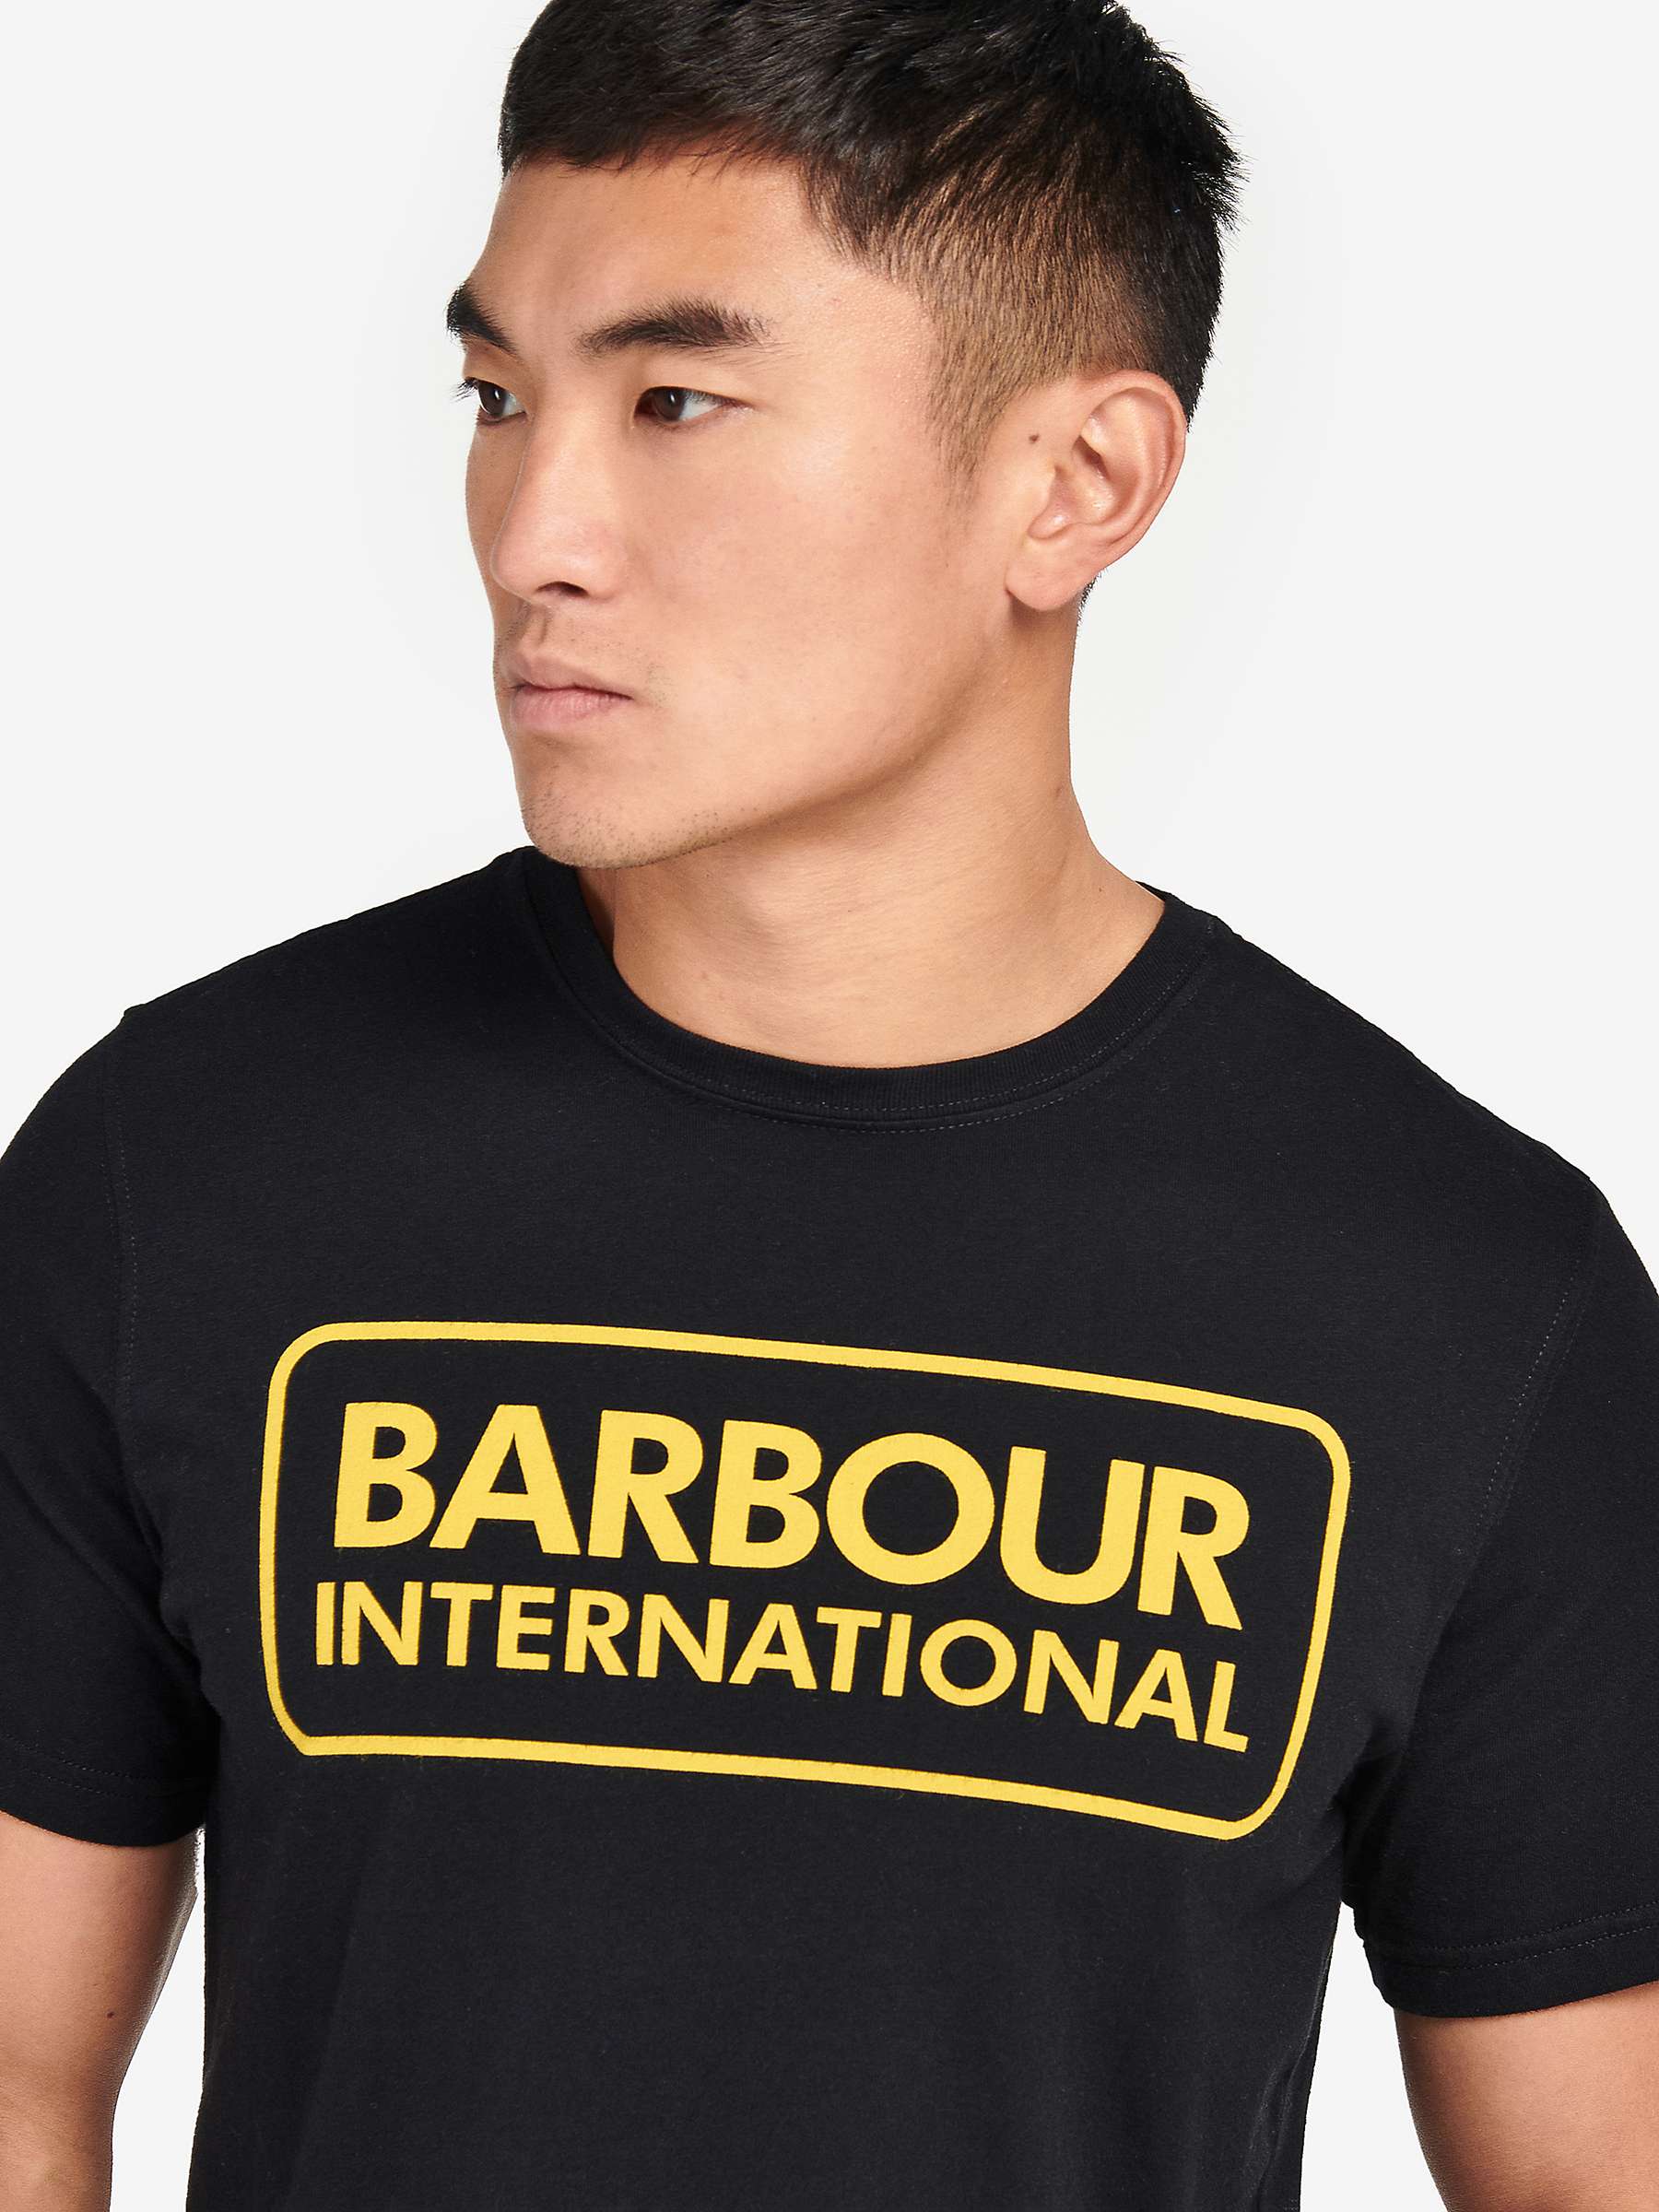 Buy Barbour International Cotton Crew Neck T-Shirt, Black Online at johnlewis.com